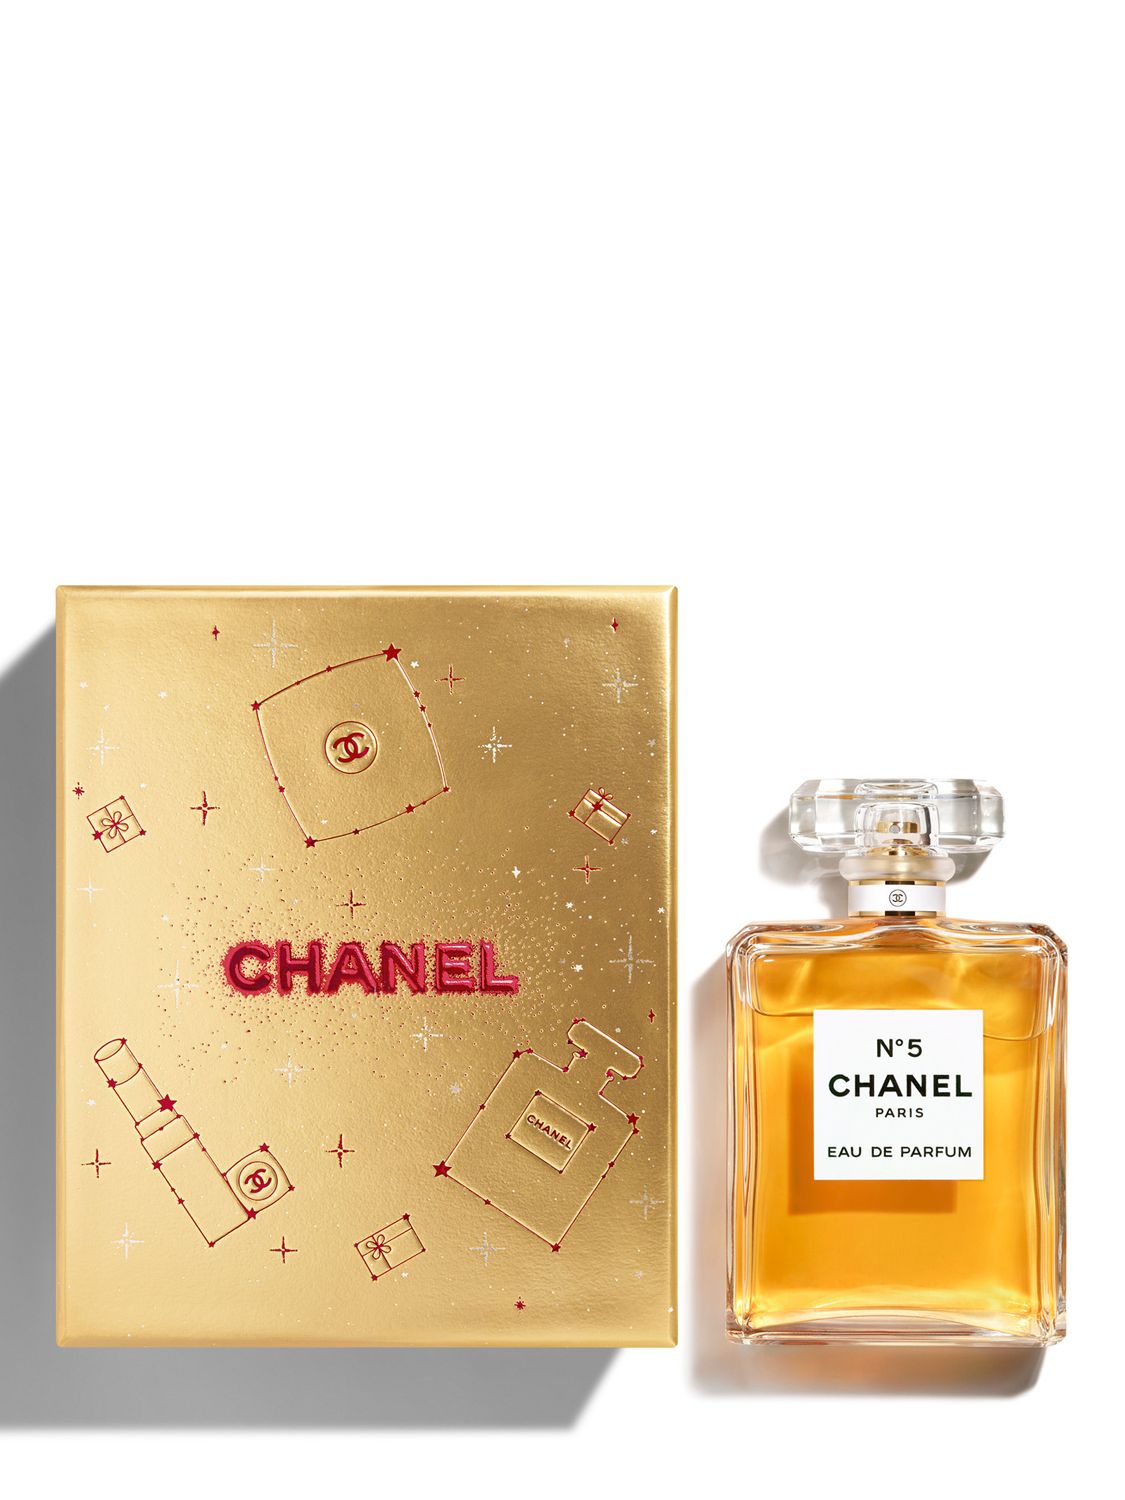 CHANEL N°5 Eau de Parfum 100ml With Gift Box